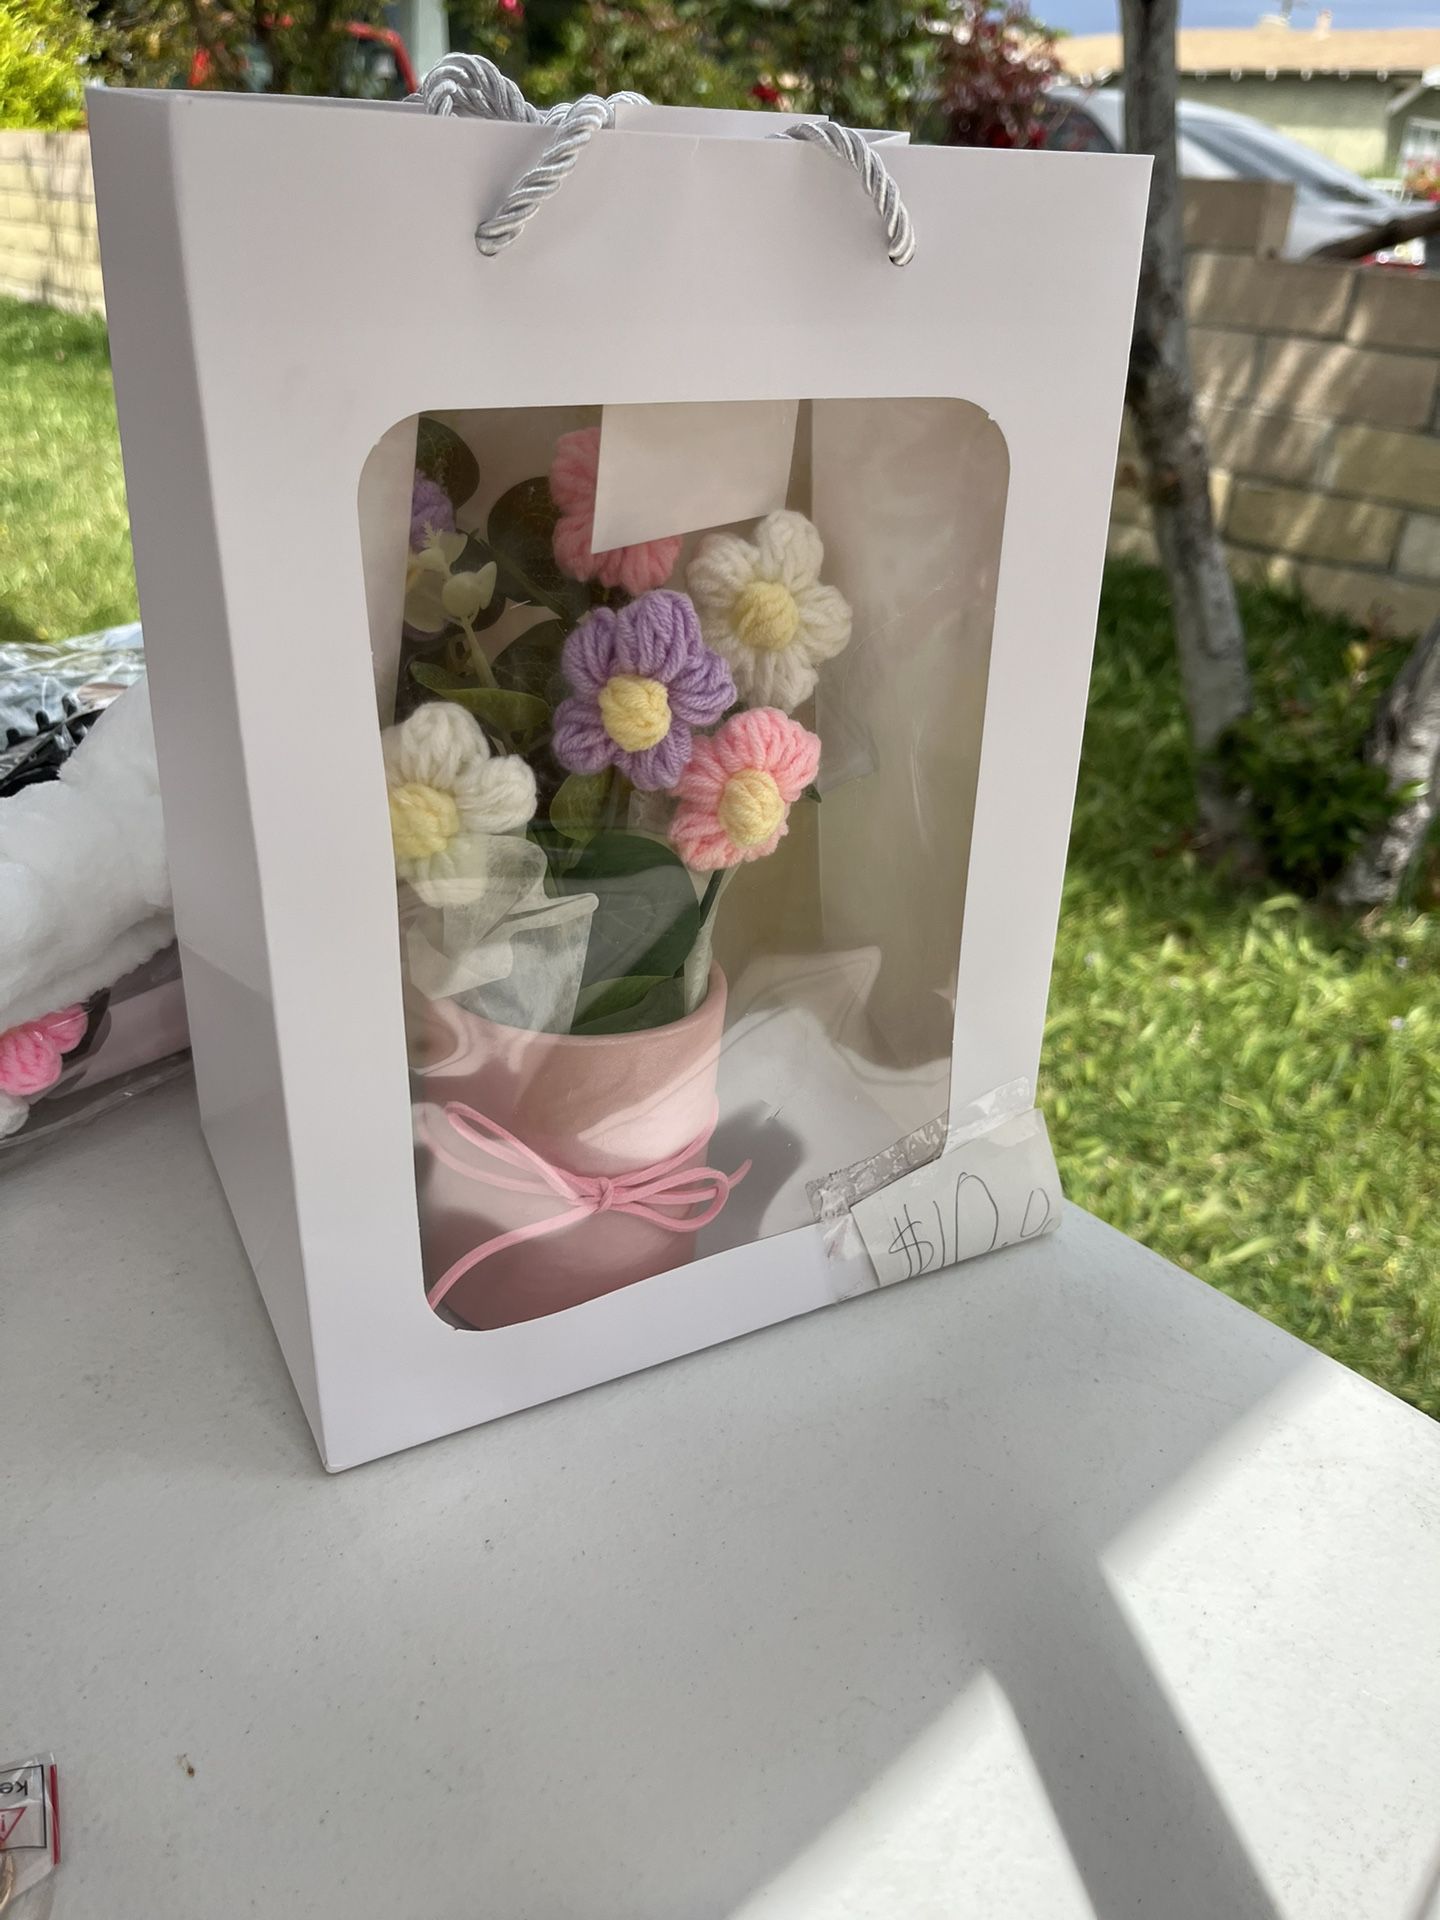 Flores /flowers Gift / Regalo 